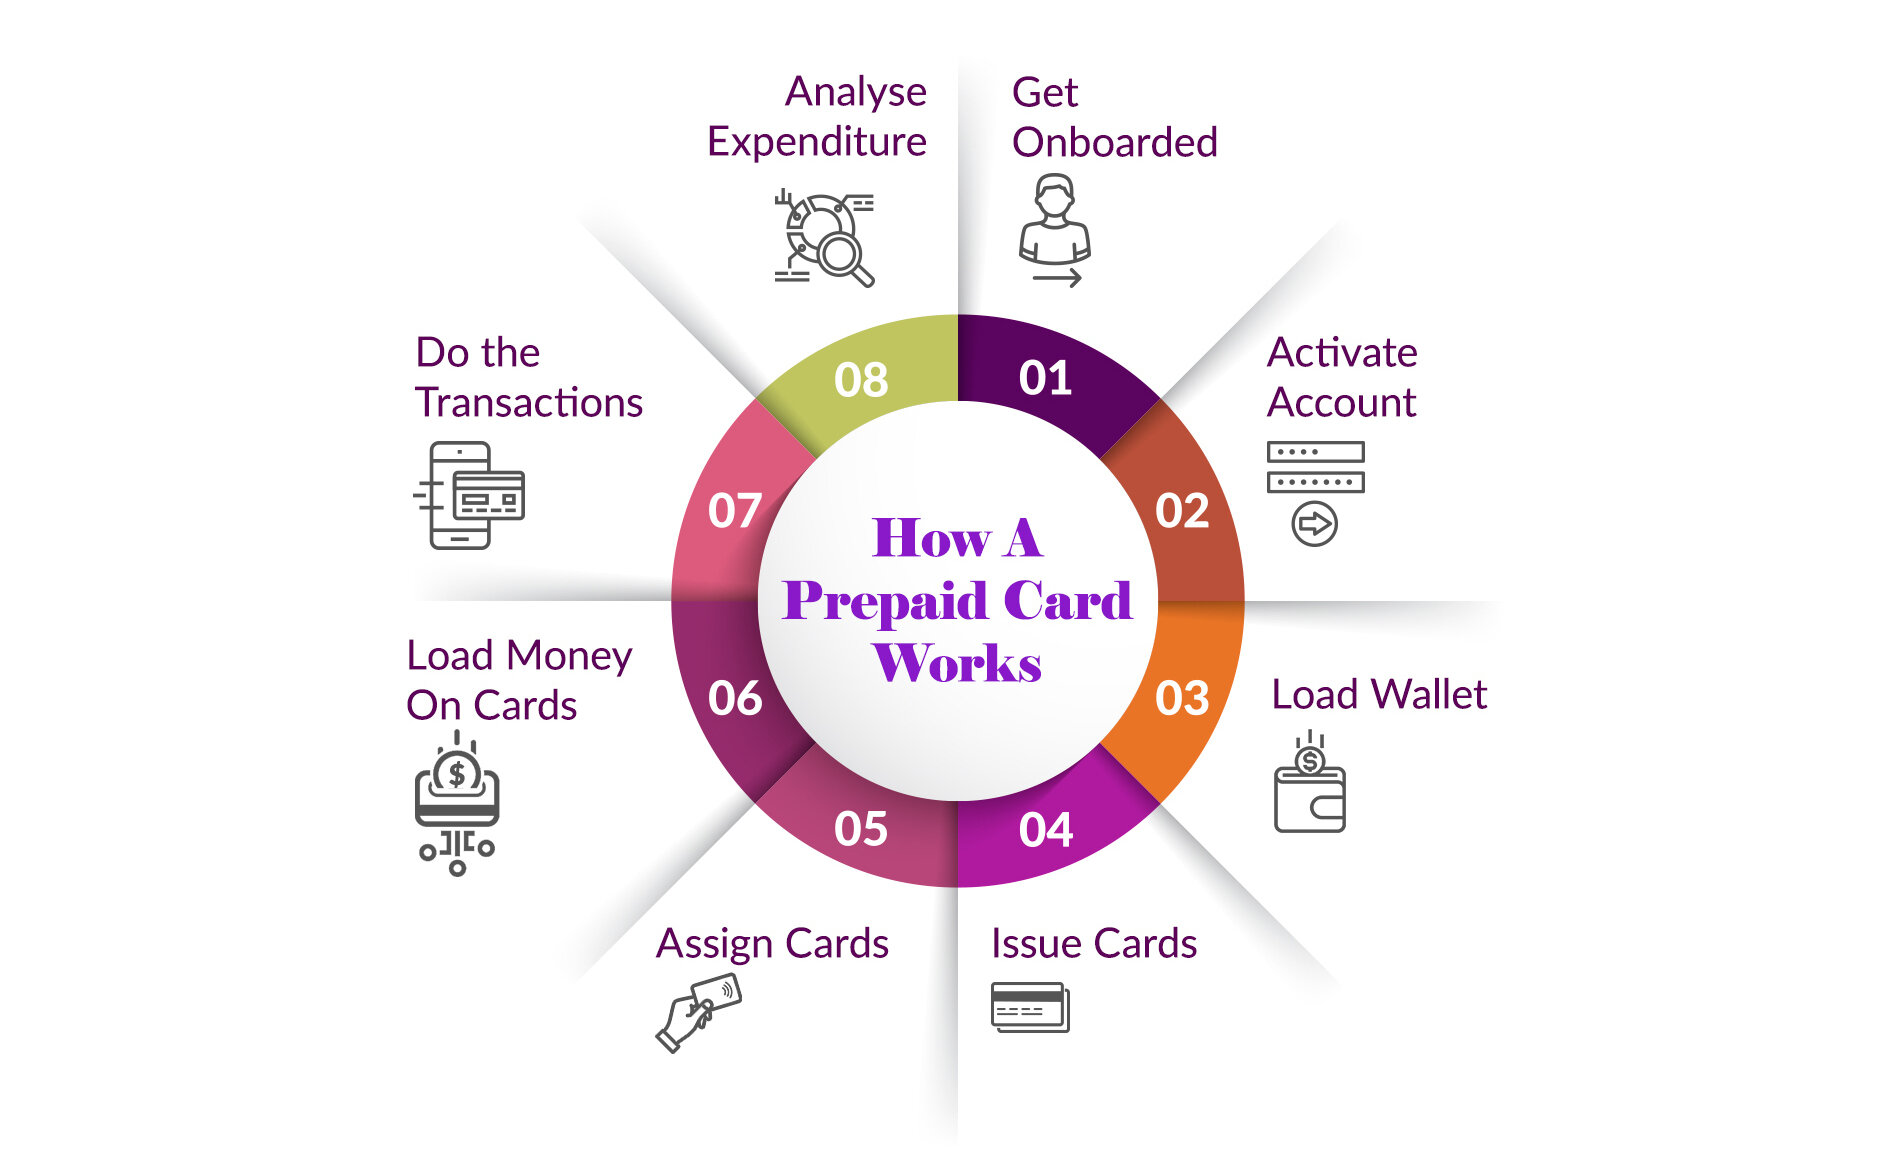 HOW PREPAID CARD WORKS